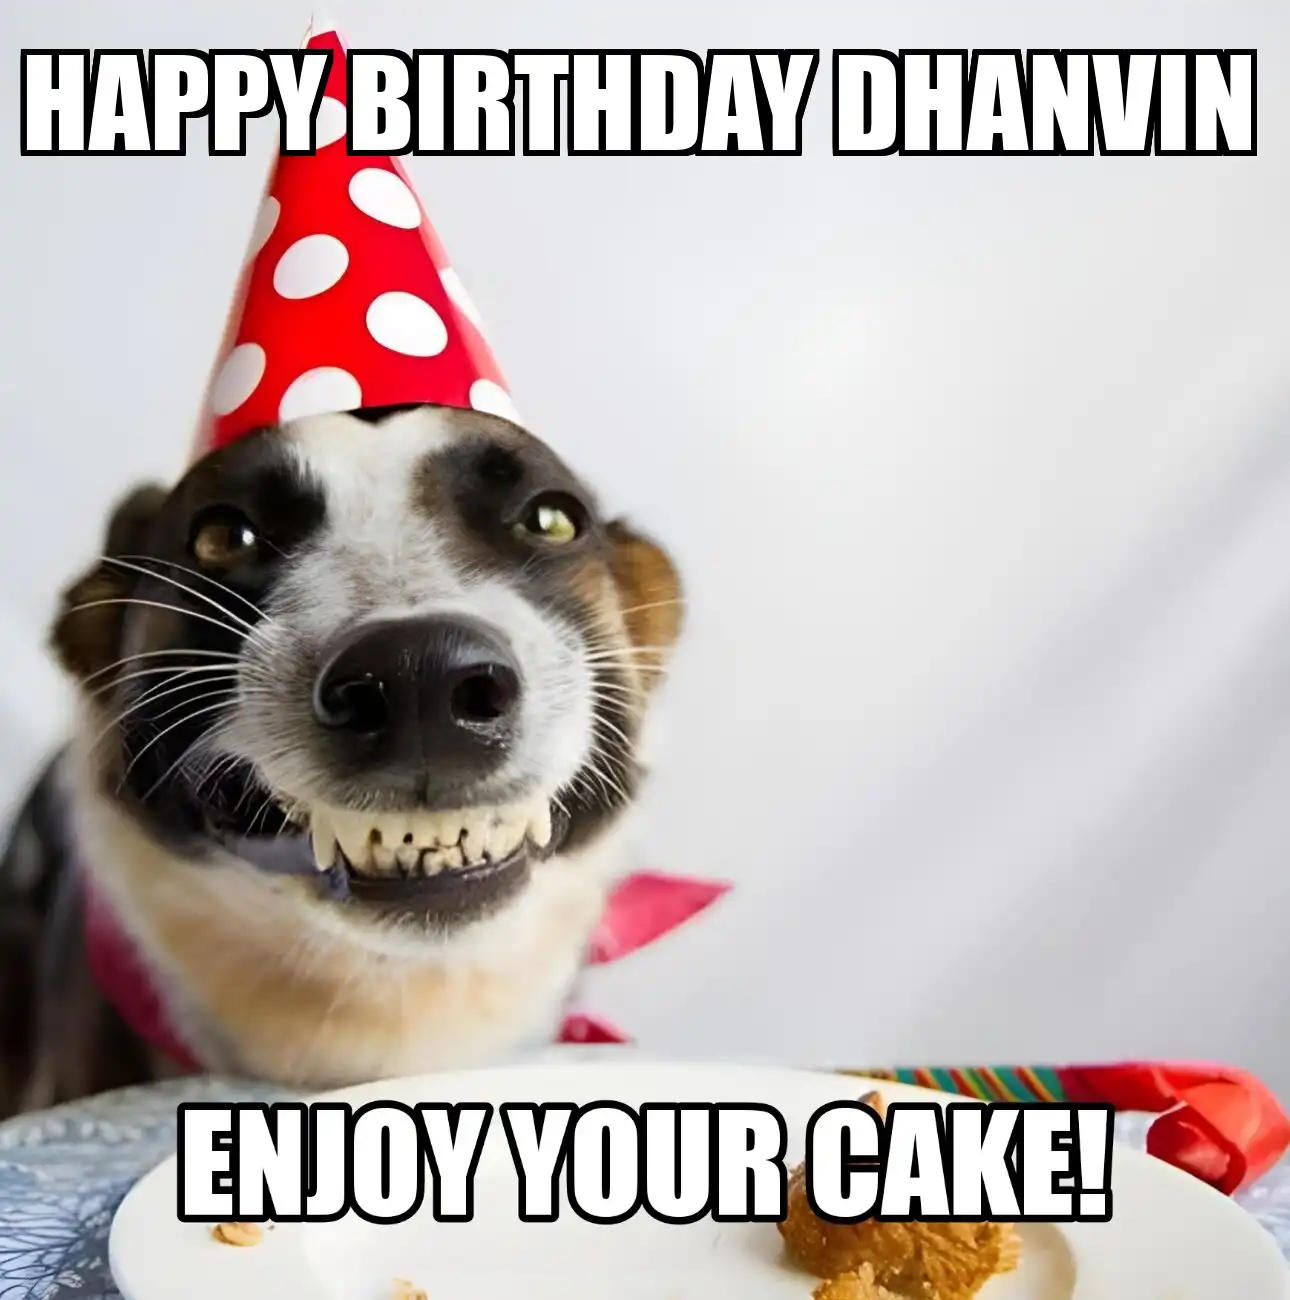 Happy Birthday Dhanvin Enjoy Your Cake Dog Meme